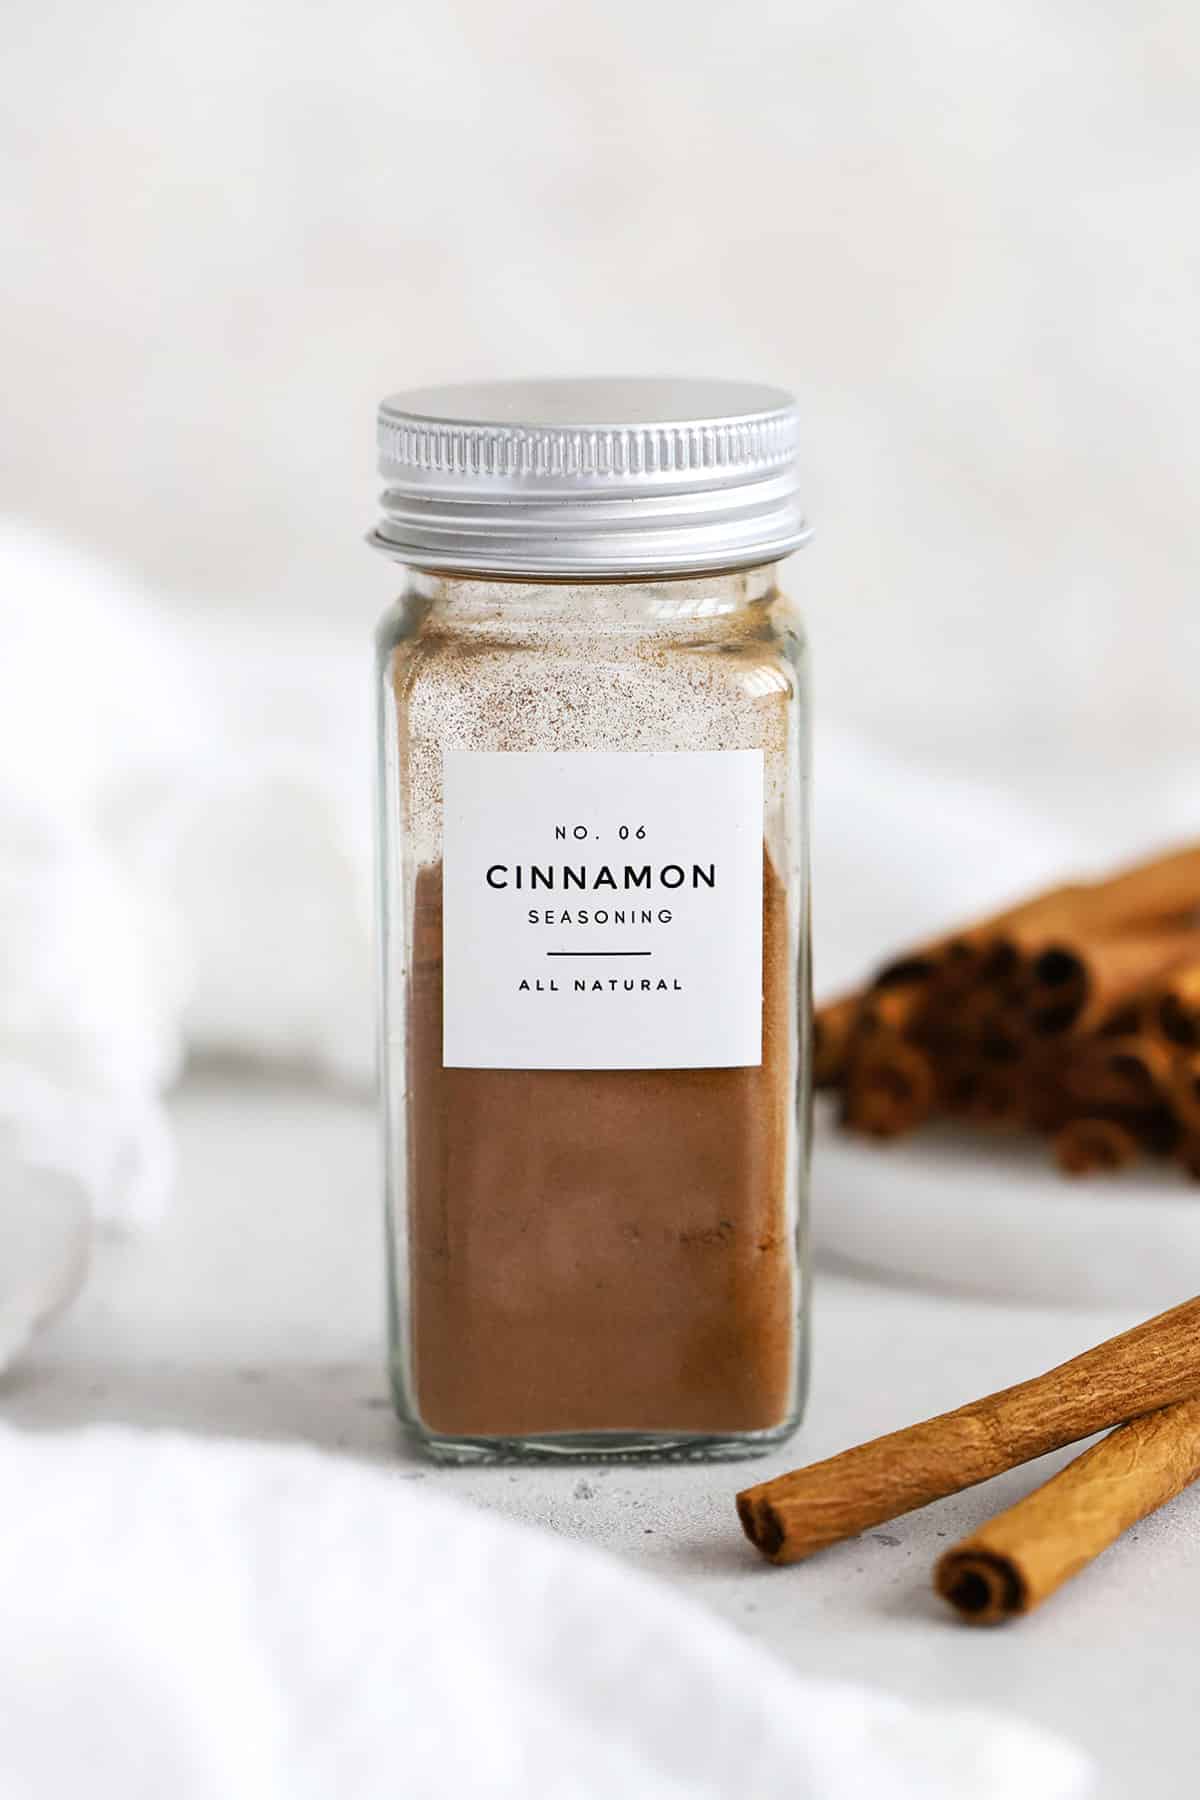 Is Cinnamon Gluten-Free?